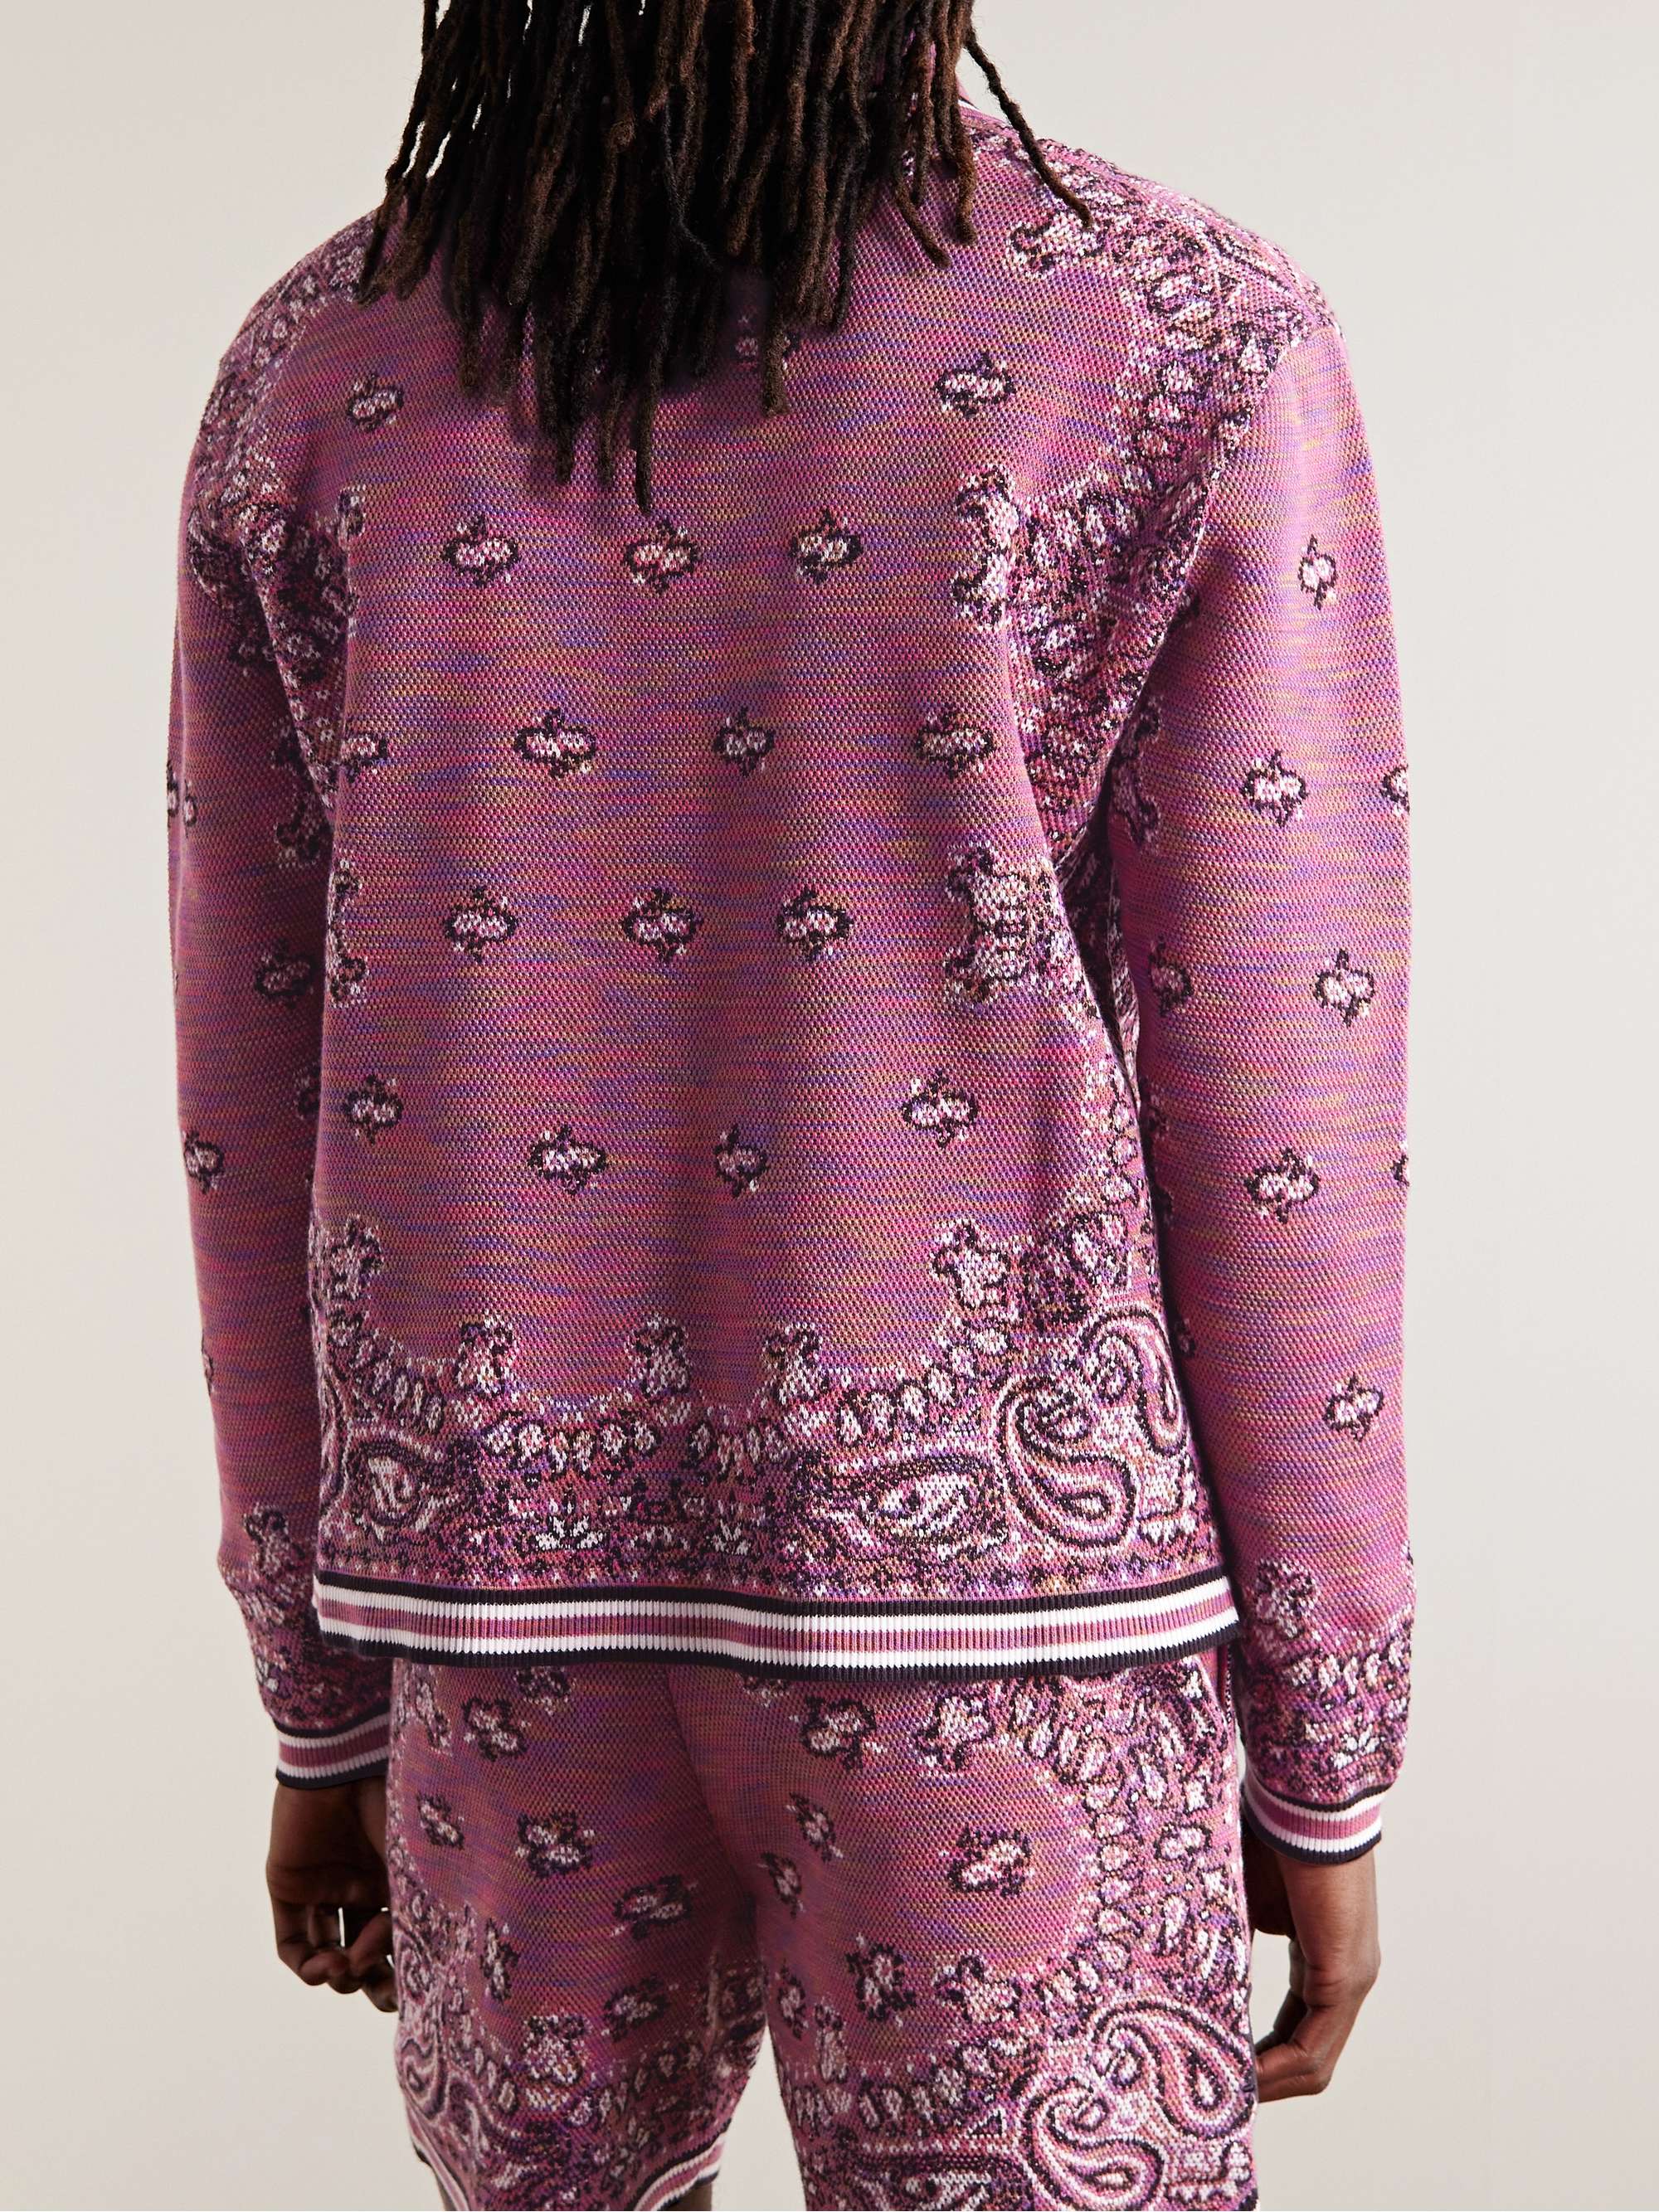 AMIRI Space-Dyed Bandana-Jacquard Cotton Polo Shirt